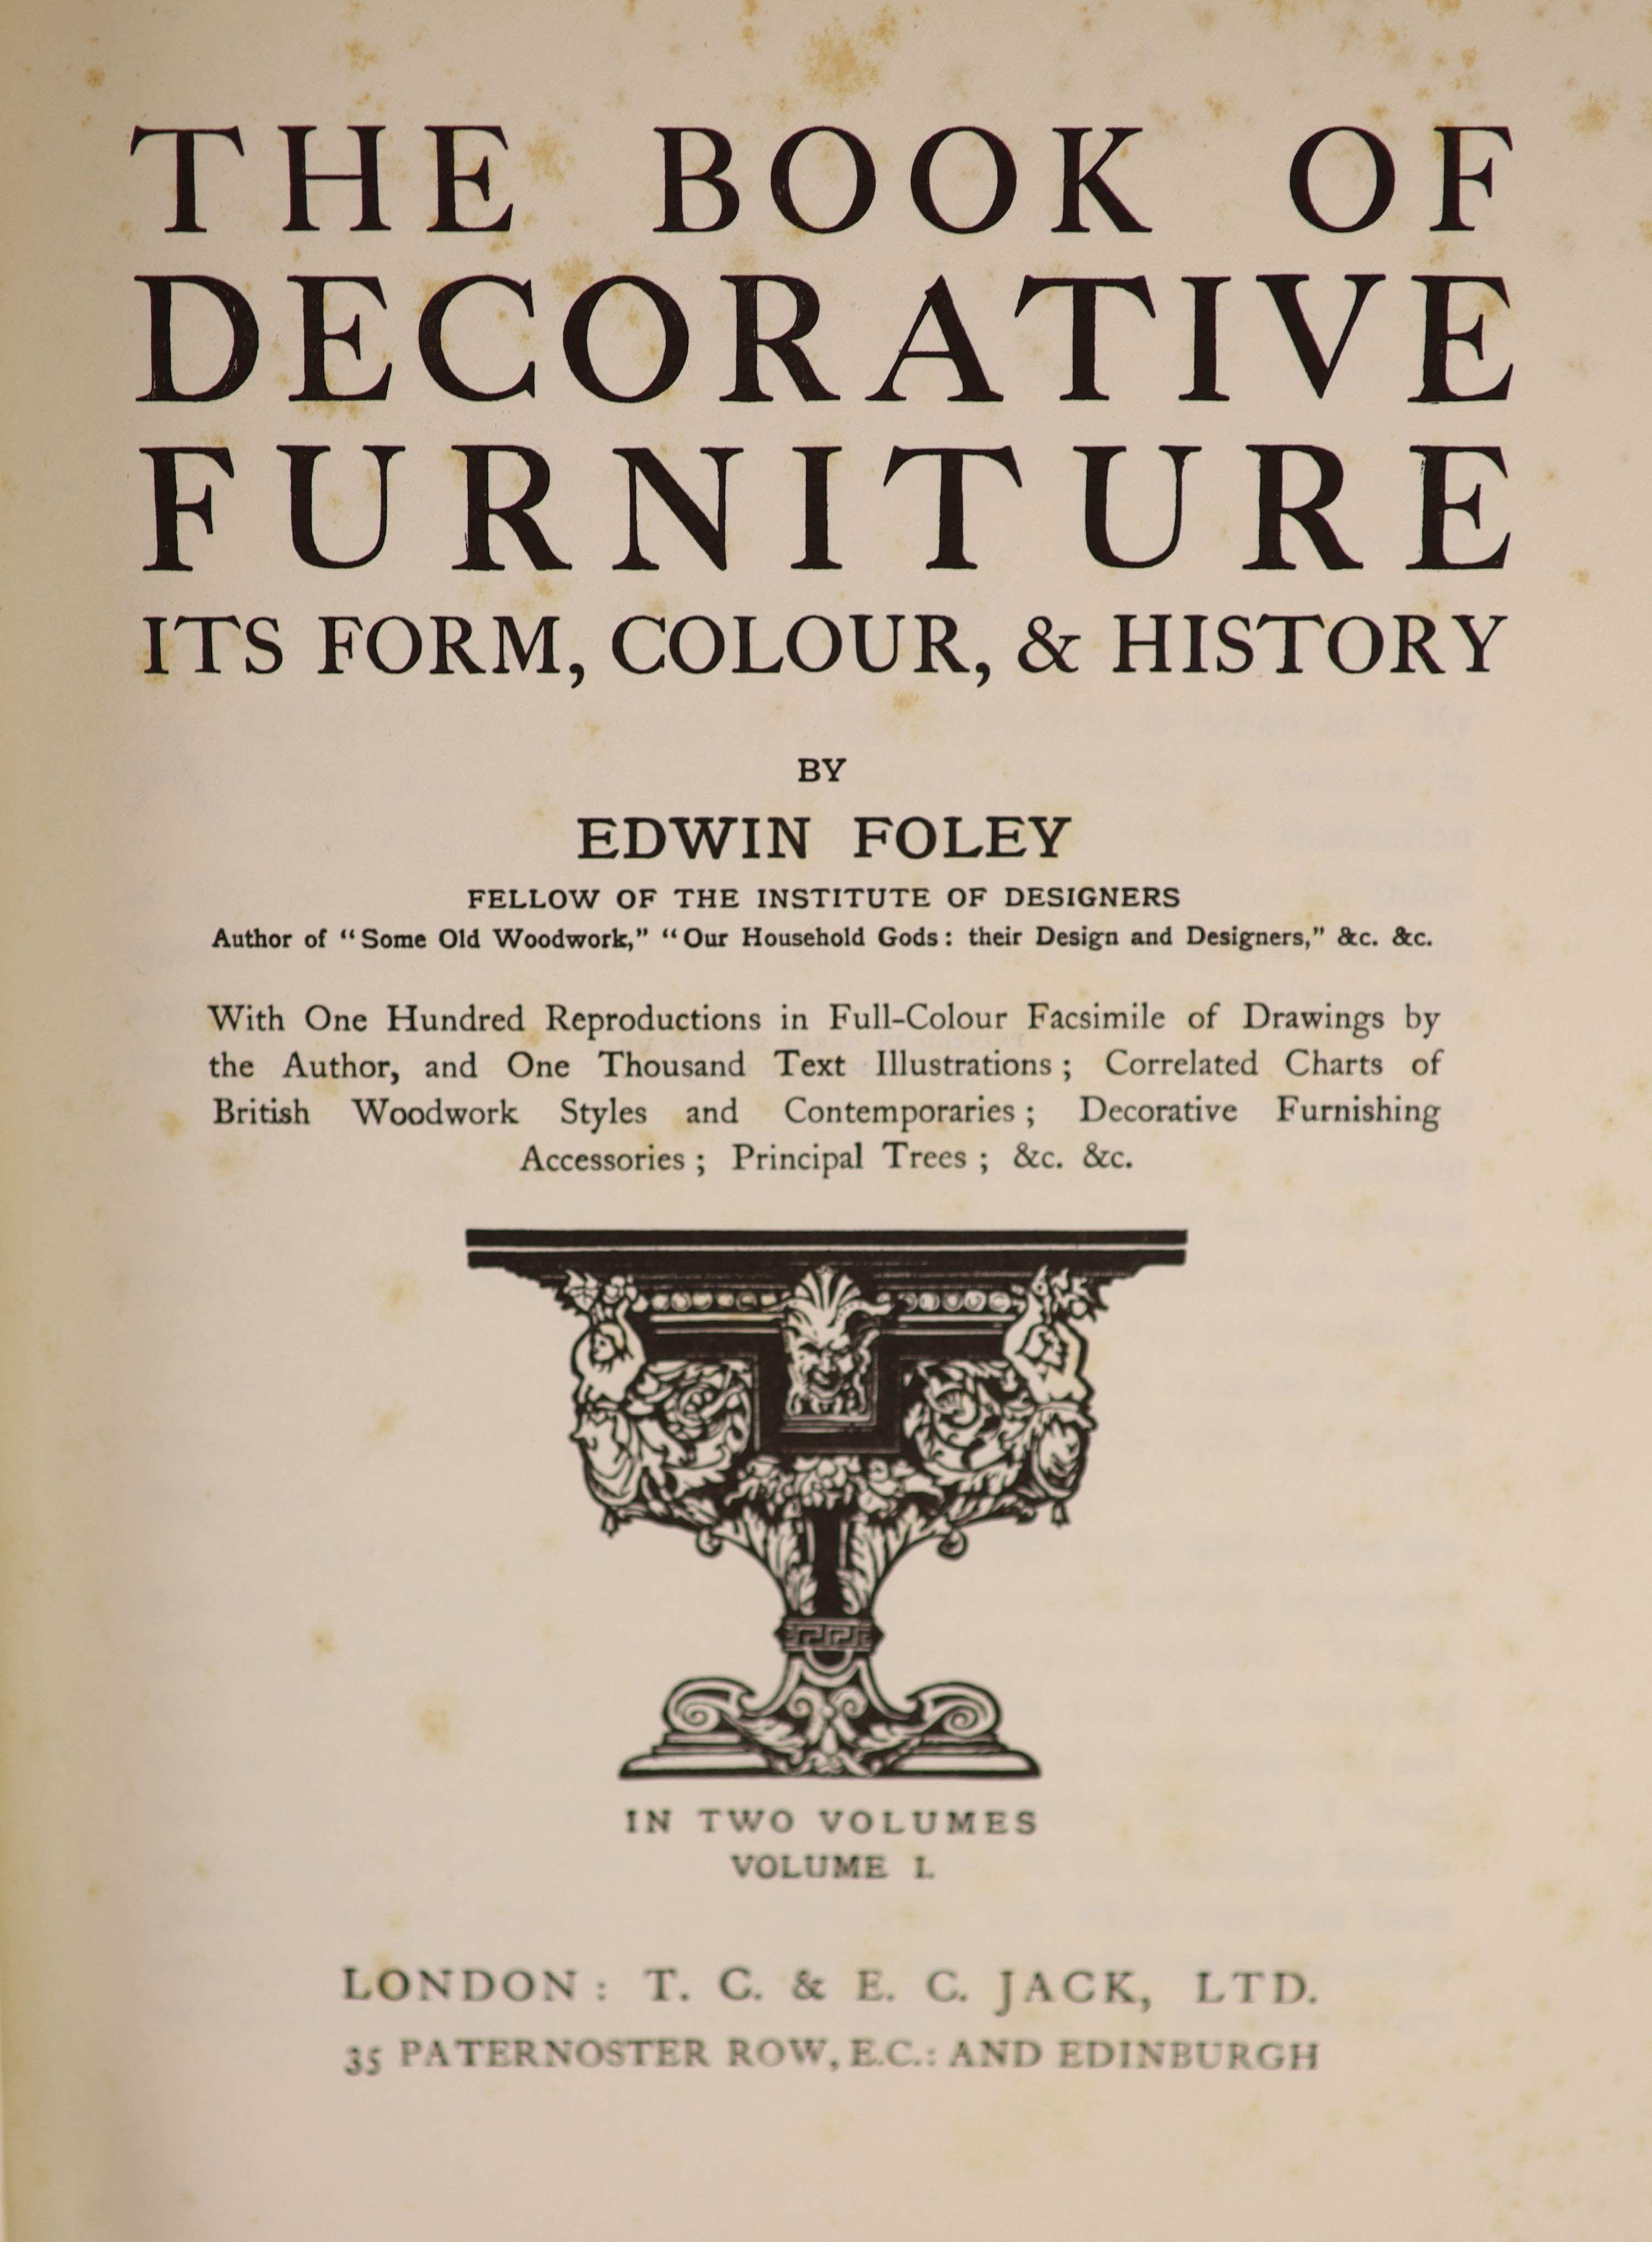 Foley, Edwin - The Book of Decorative Furniture, 2 vols, qto, brown cloth, gilt lettered, T.C. & E.C. Jack, London, [1909]